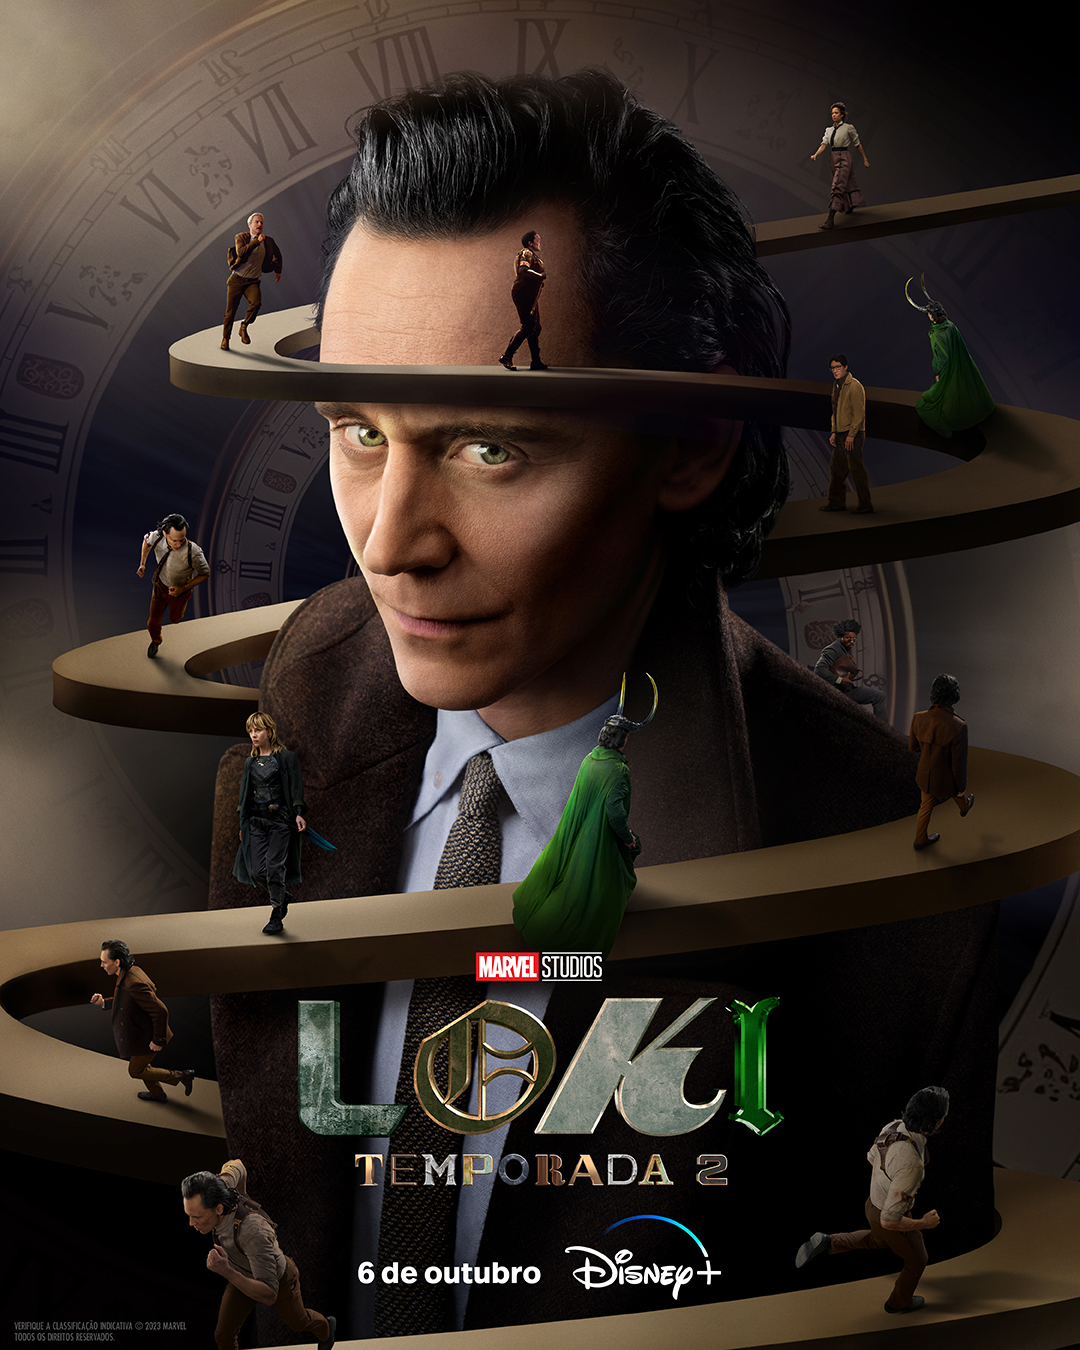 Loki (Série), Sinopse, Trailers e Curiosidades - Cinema10